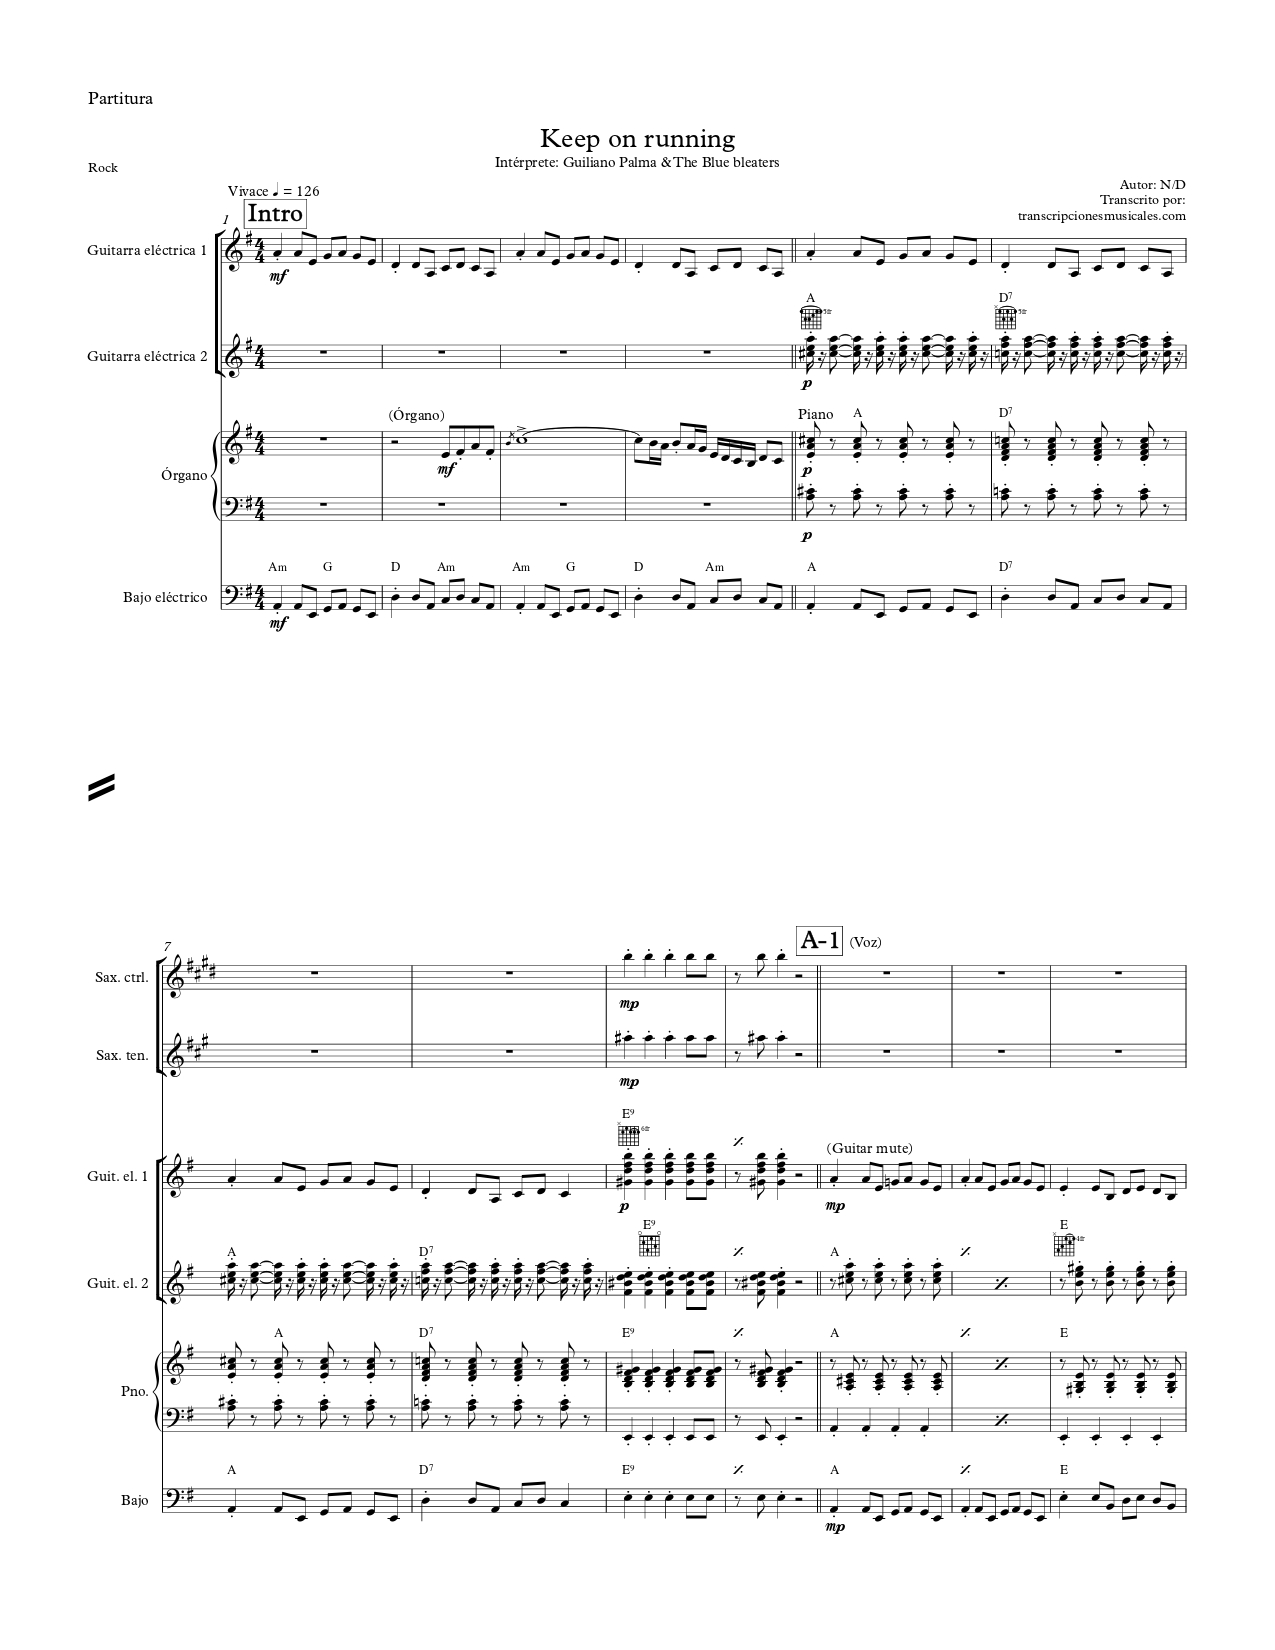 Keep on running - sheet music page 1